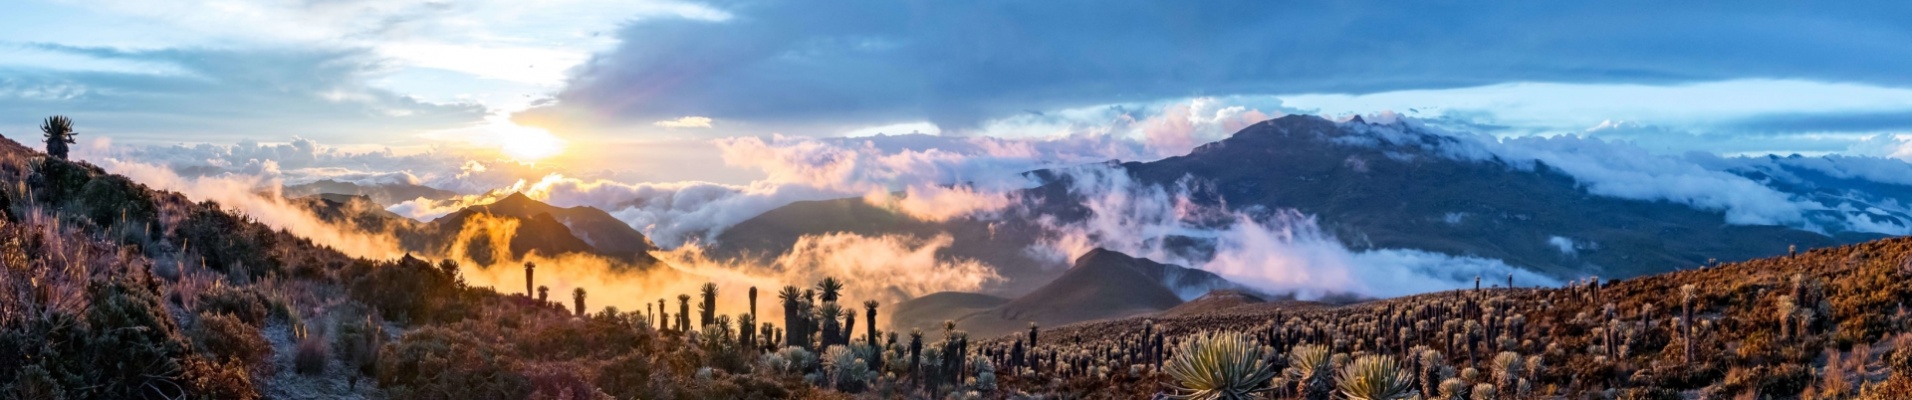 lever-soleil-montagne-volcan-Tolima-Los-Nevados-colombie